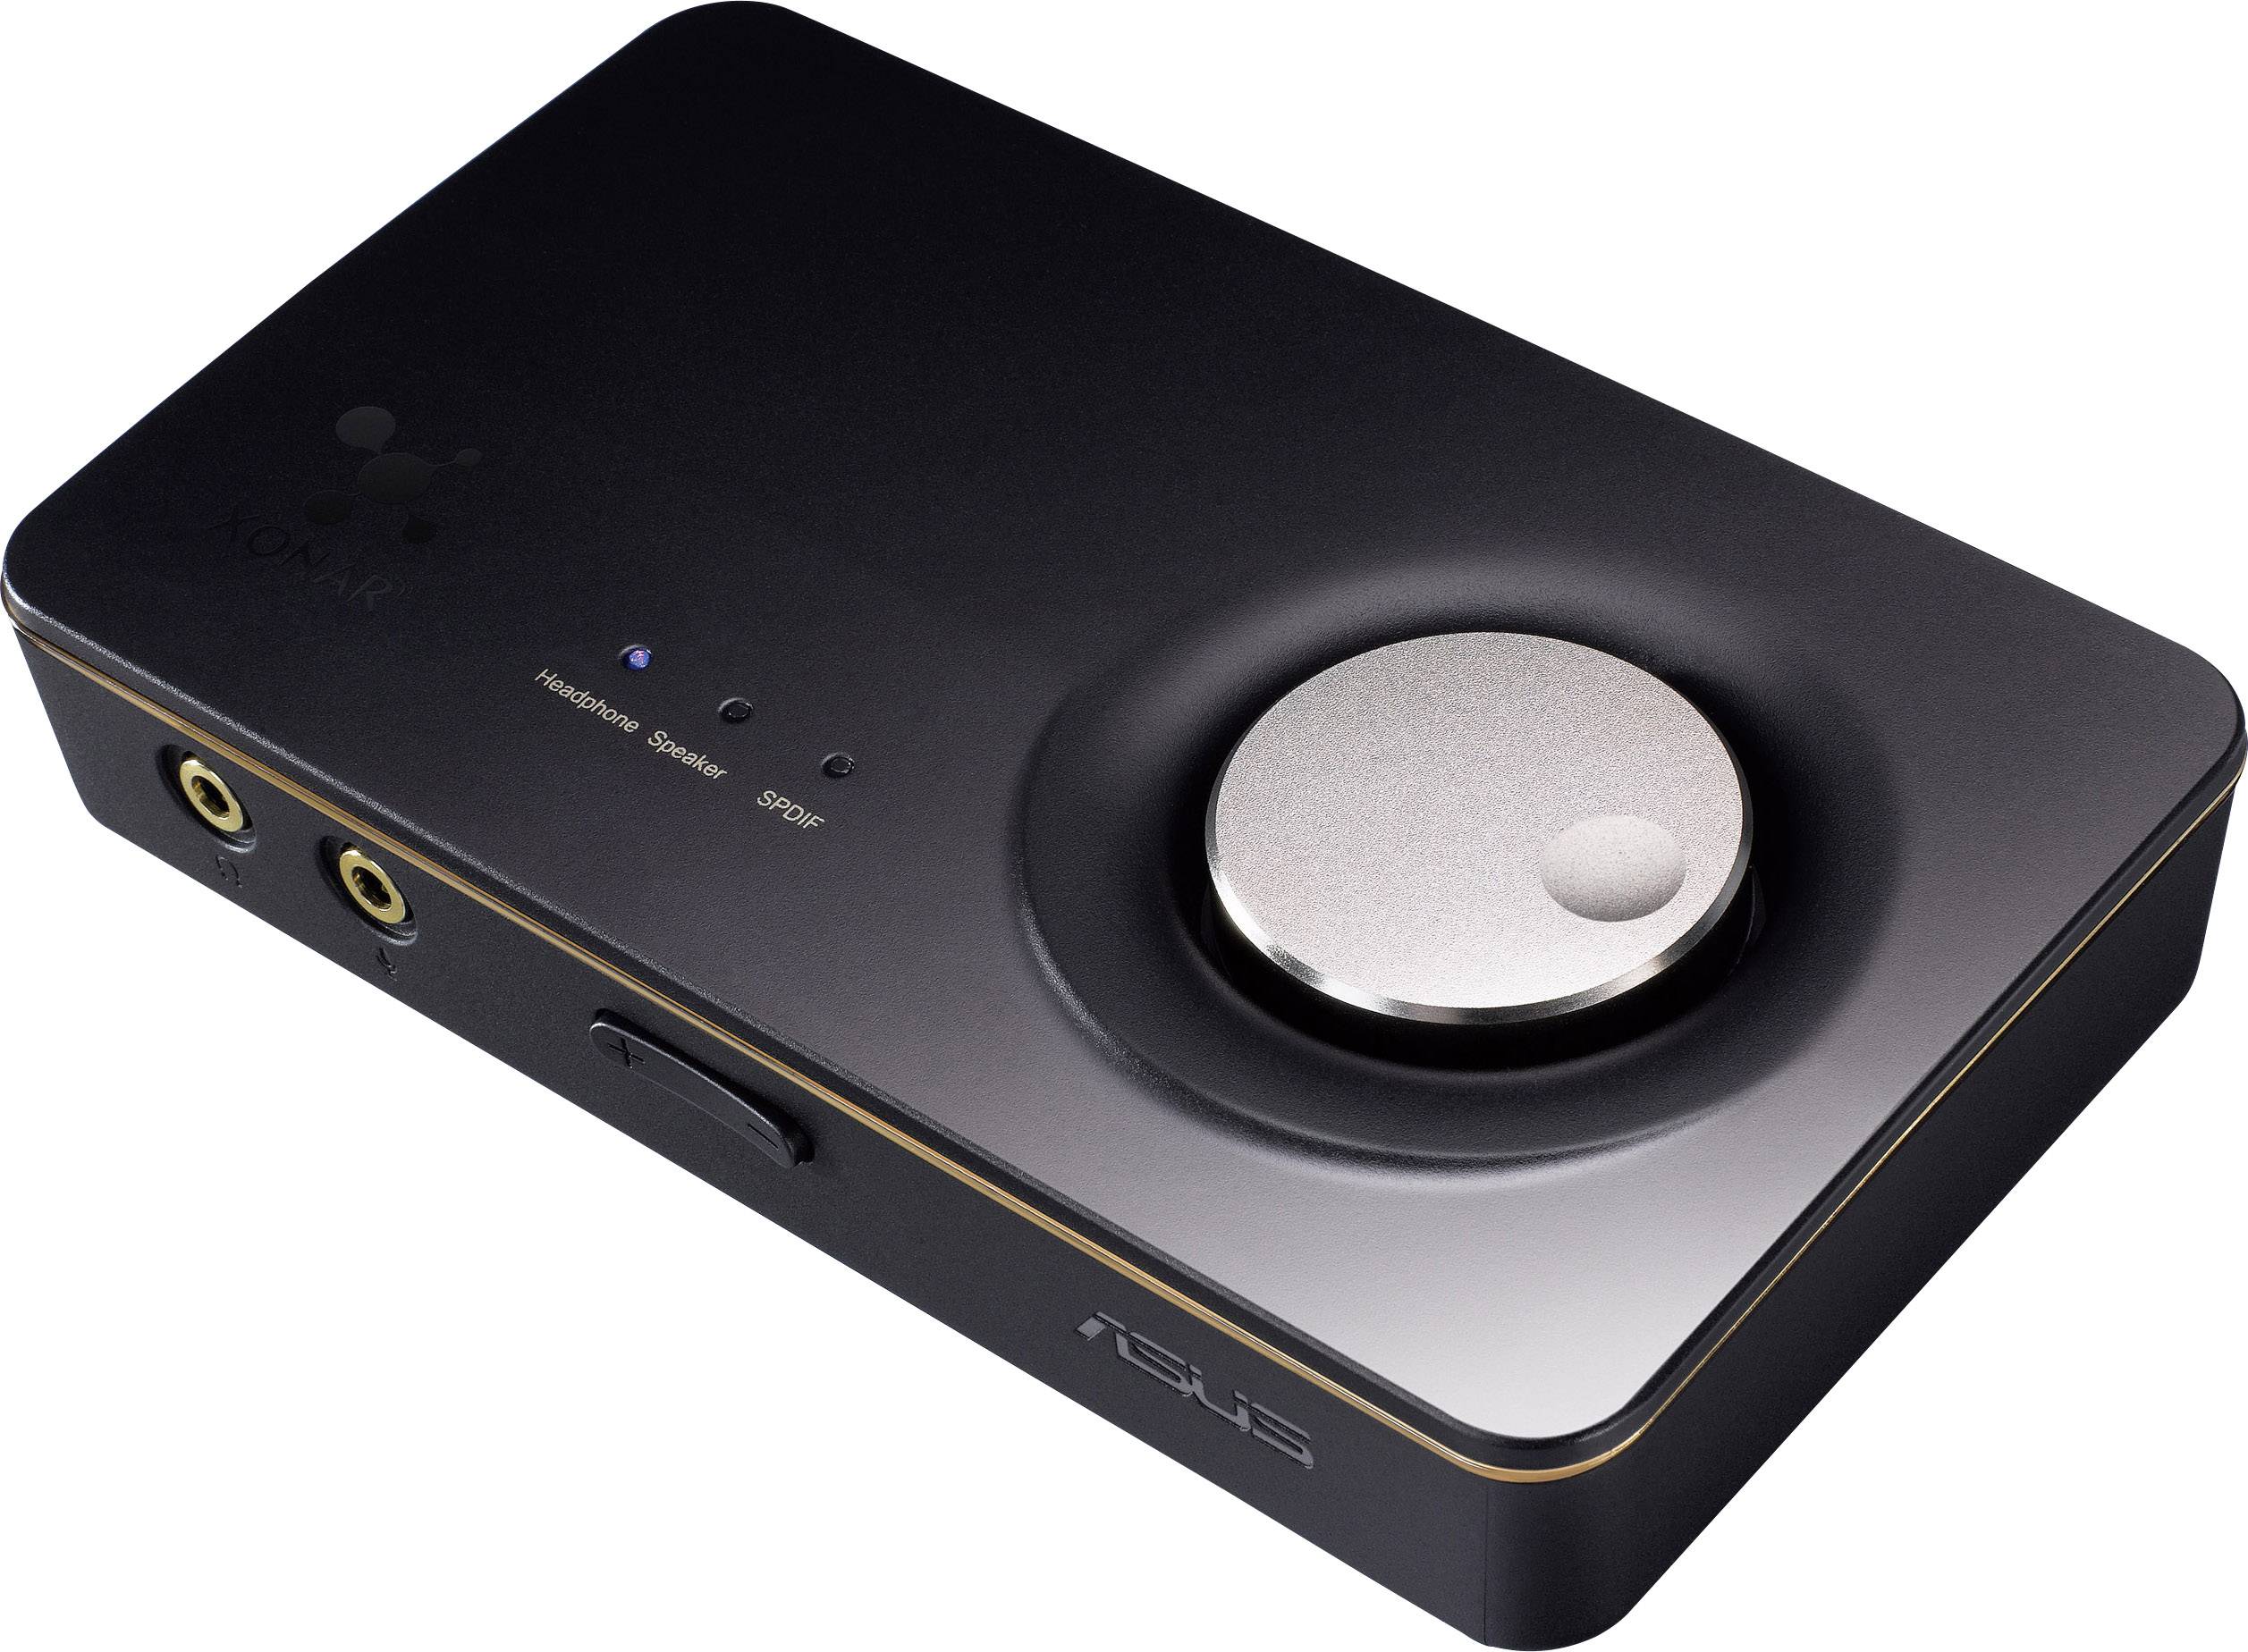 Asus Xonar 7.1 Sound card, external Digital output, External jacks, External volume control | Conrad.com